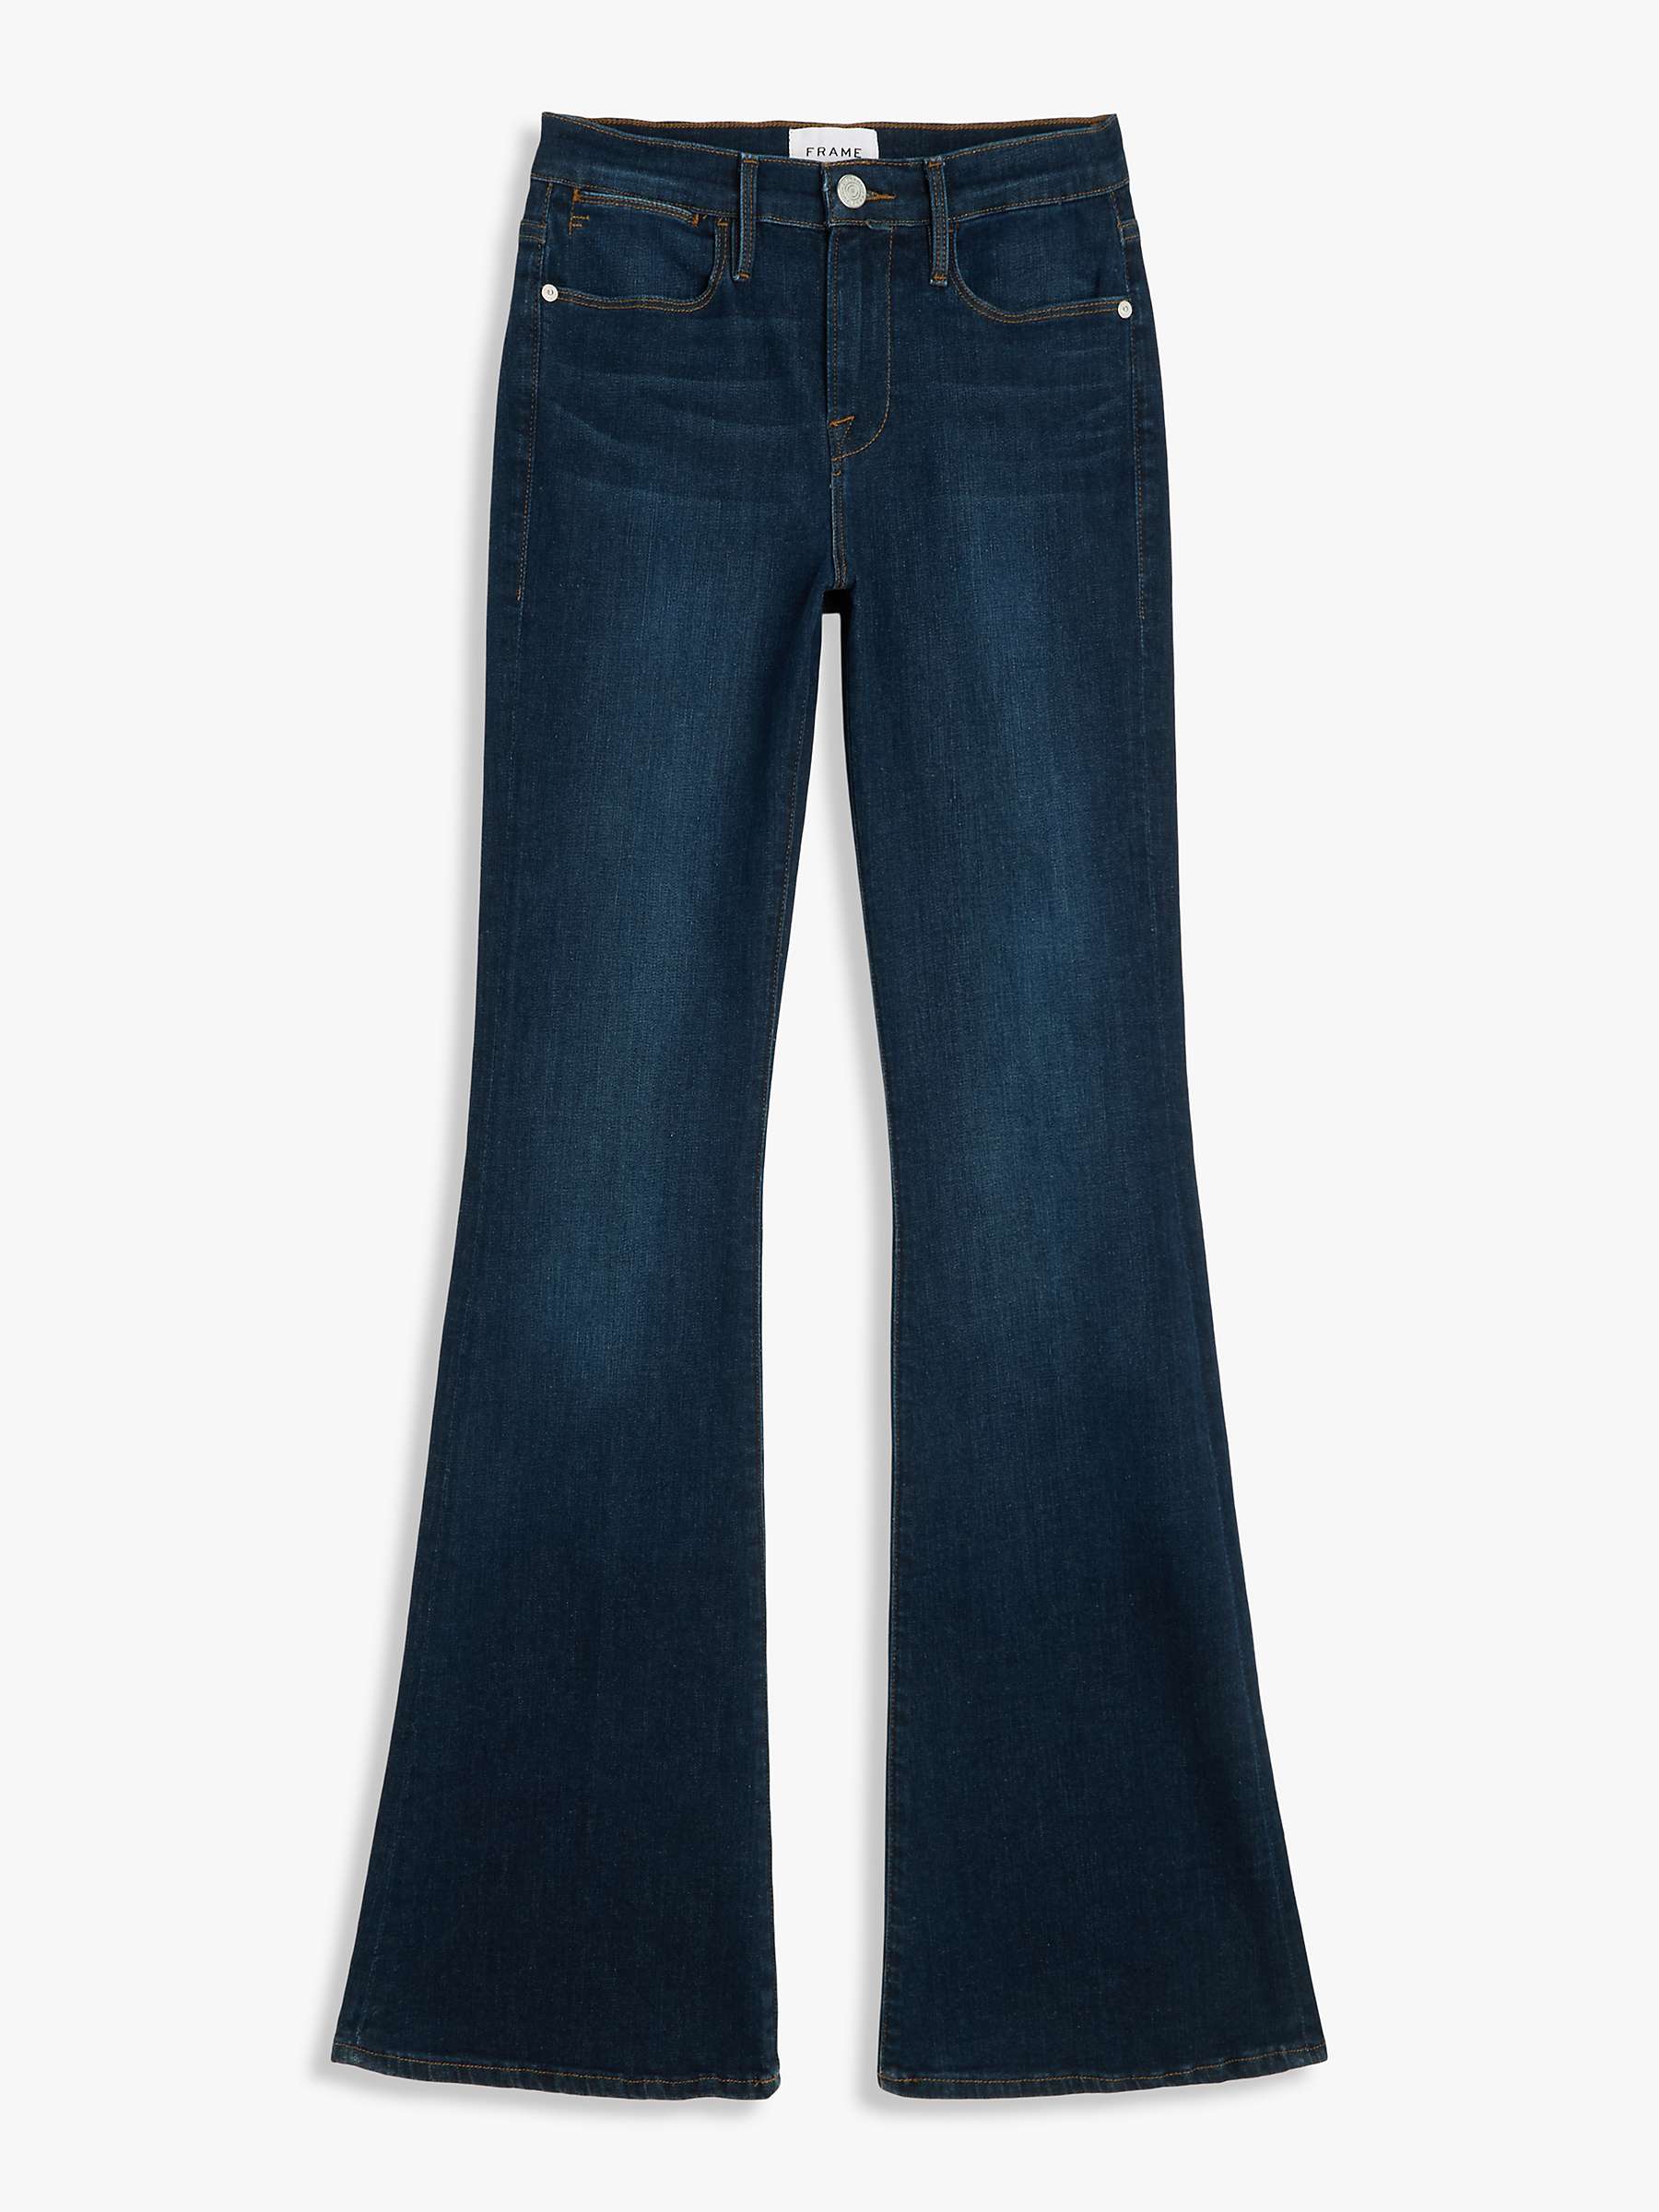 Buy FRAME Le High Flare Jeans, Sutherland Online at johnlewis.com